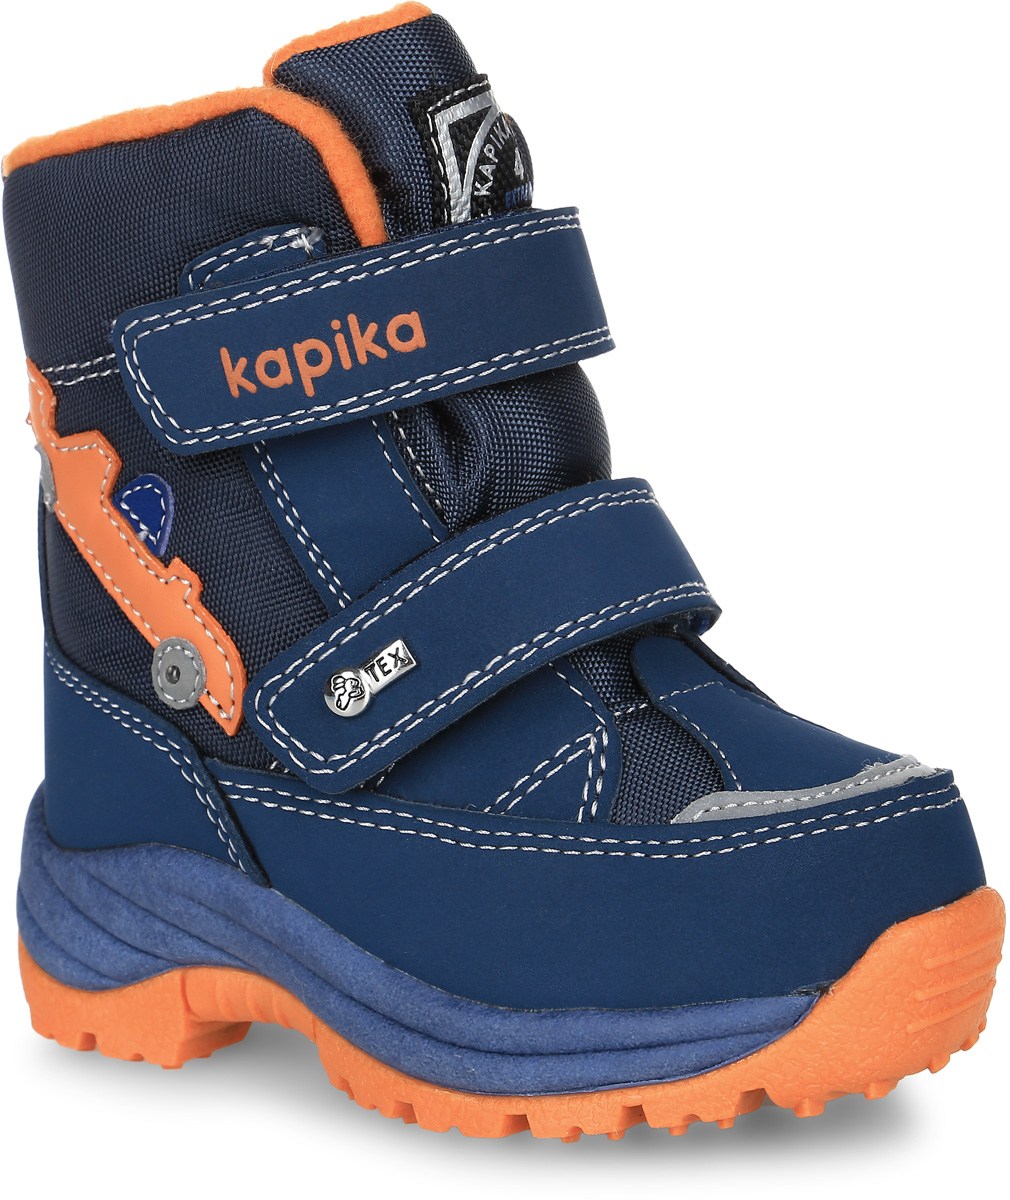 Ботинки для мальчика Kapika, цвет: темно-синий, оранжевый. 41151-2. Размер 23